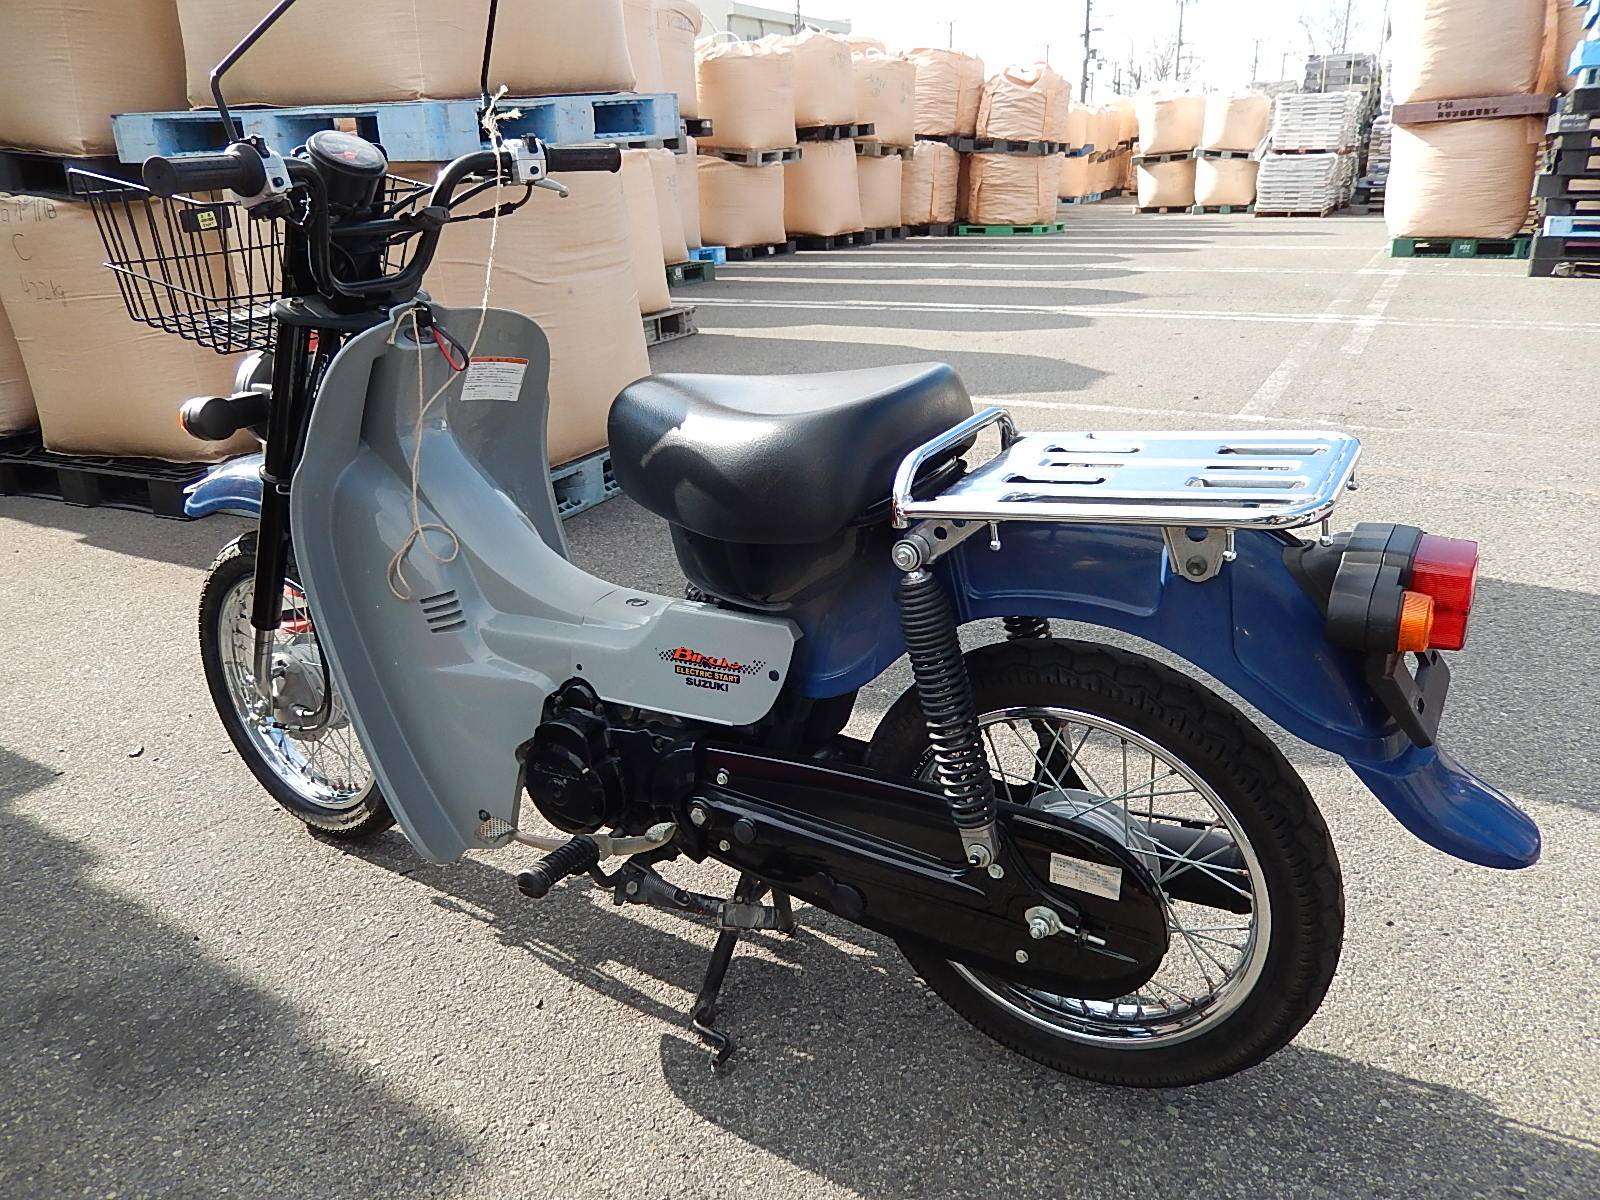 Обзор мотоцикла suzuki intruder m800 (boulevard m50) — bikeswiki - энциклопедия японских мотоциклов